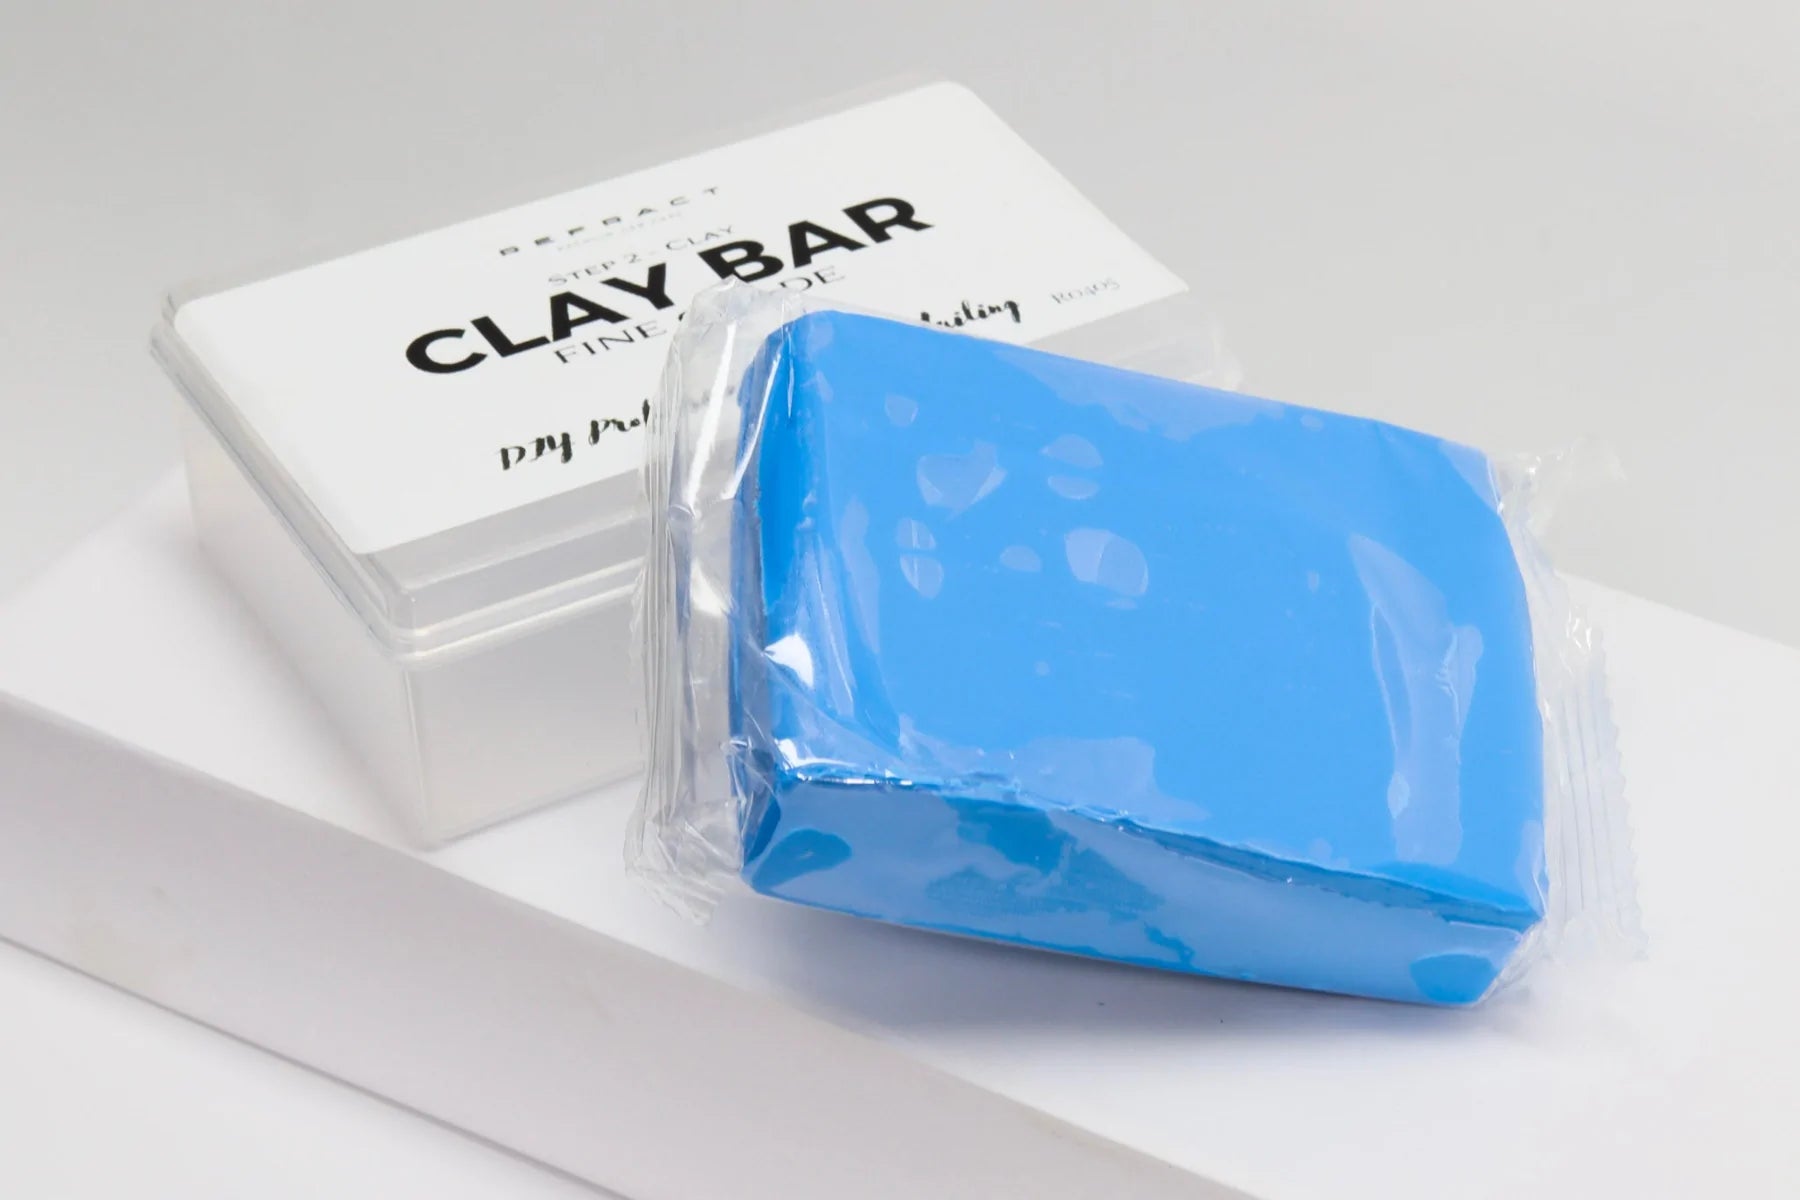 Refract 150g Fine Grade Clay Bar